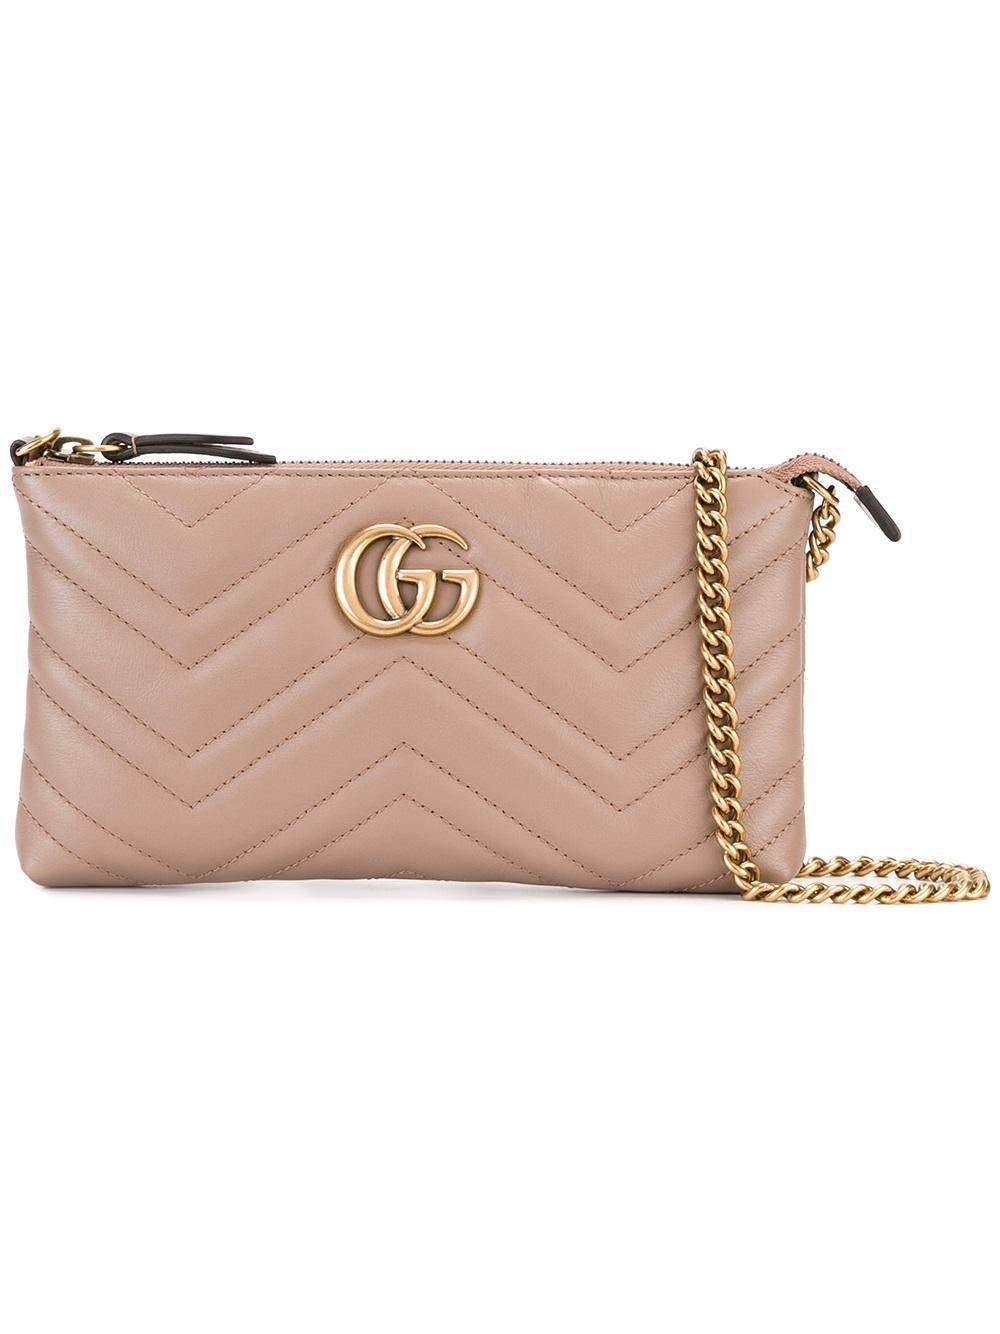 Lyst - Gucci Gg Marmont Wallet Crossbody Bag